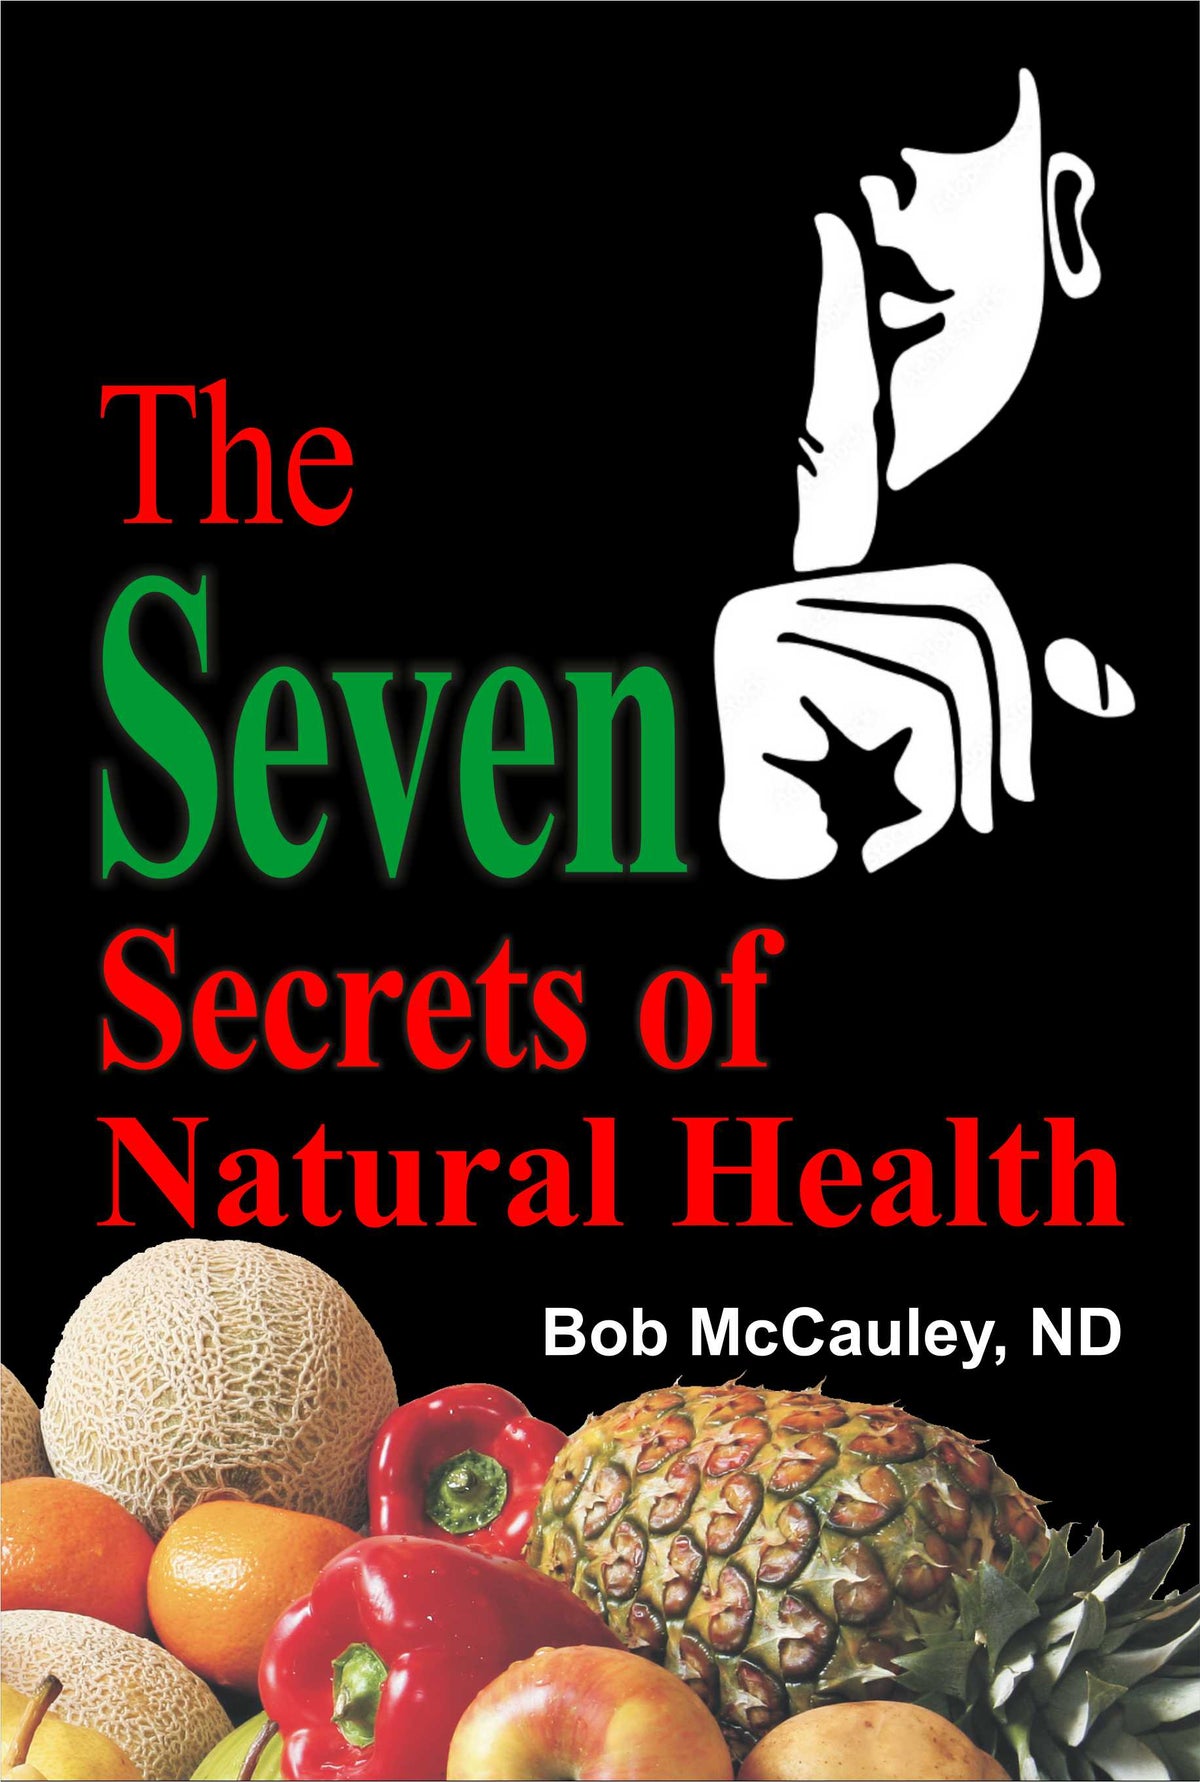 The Seven Secrets of Natural Health